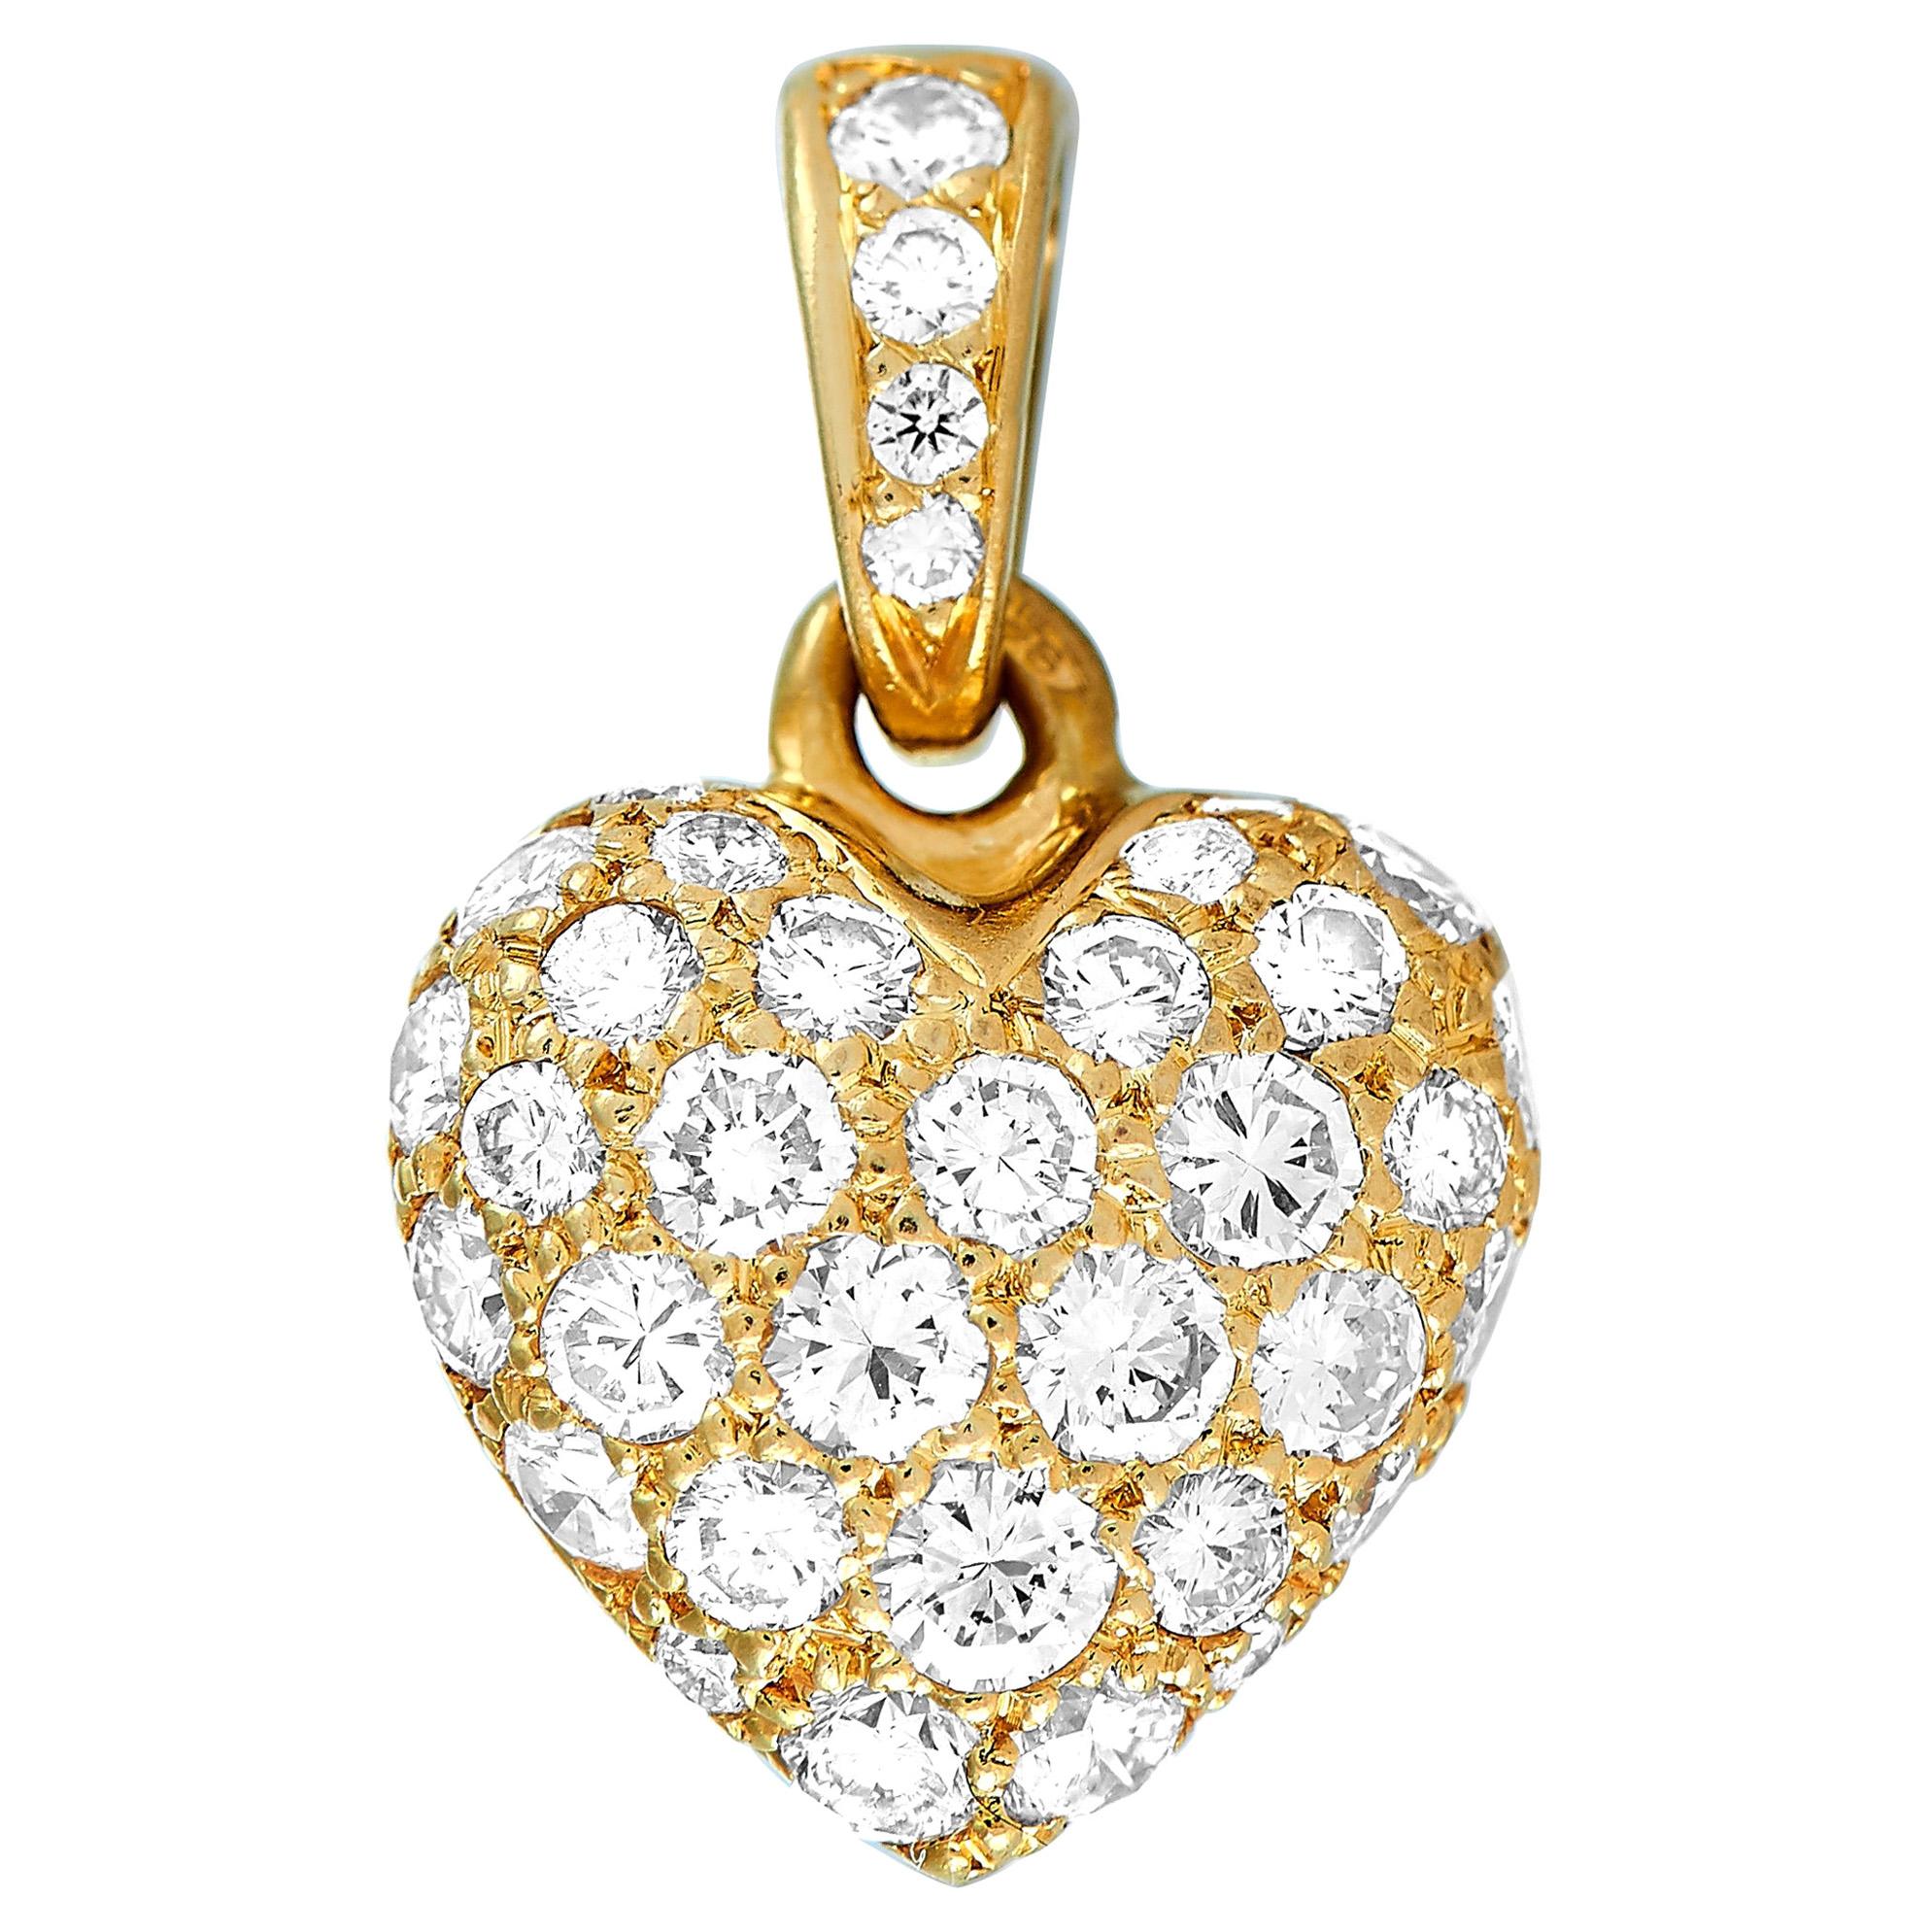 Cartier 18 Karat Yellow Gold 0.65 Carat Full Diamond Pave Heart Pendant